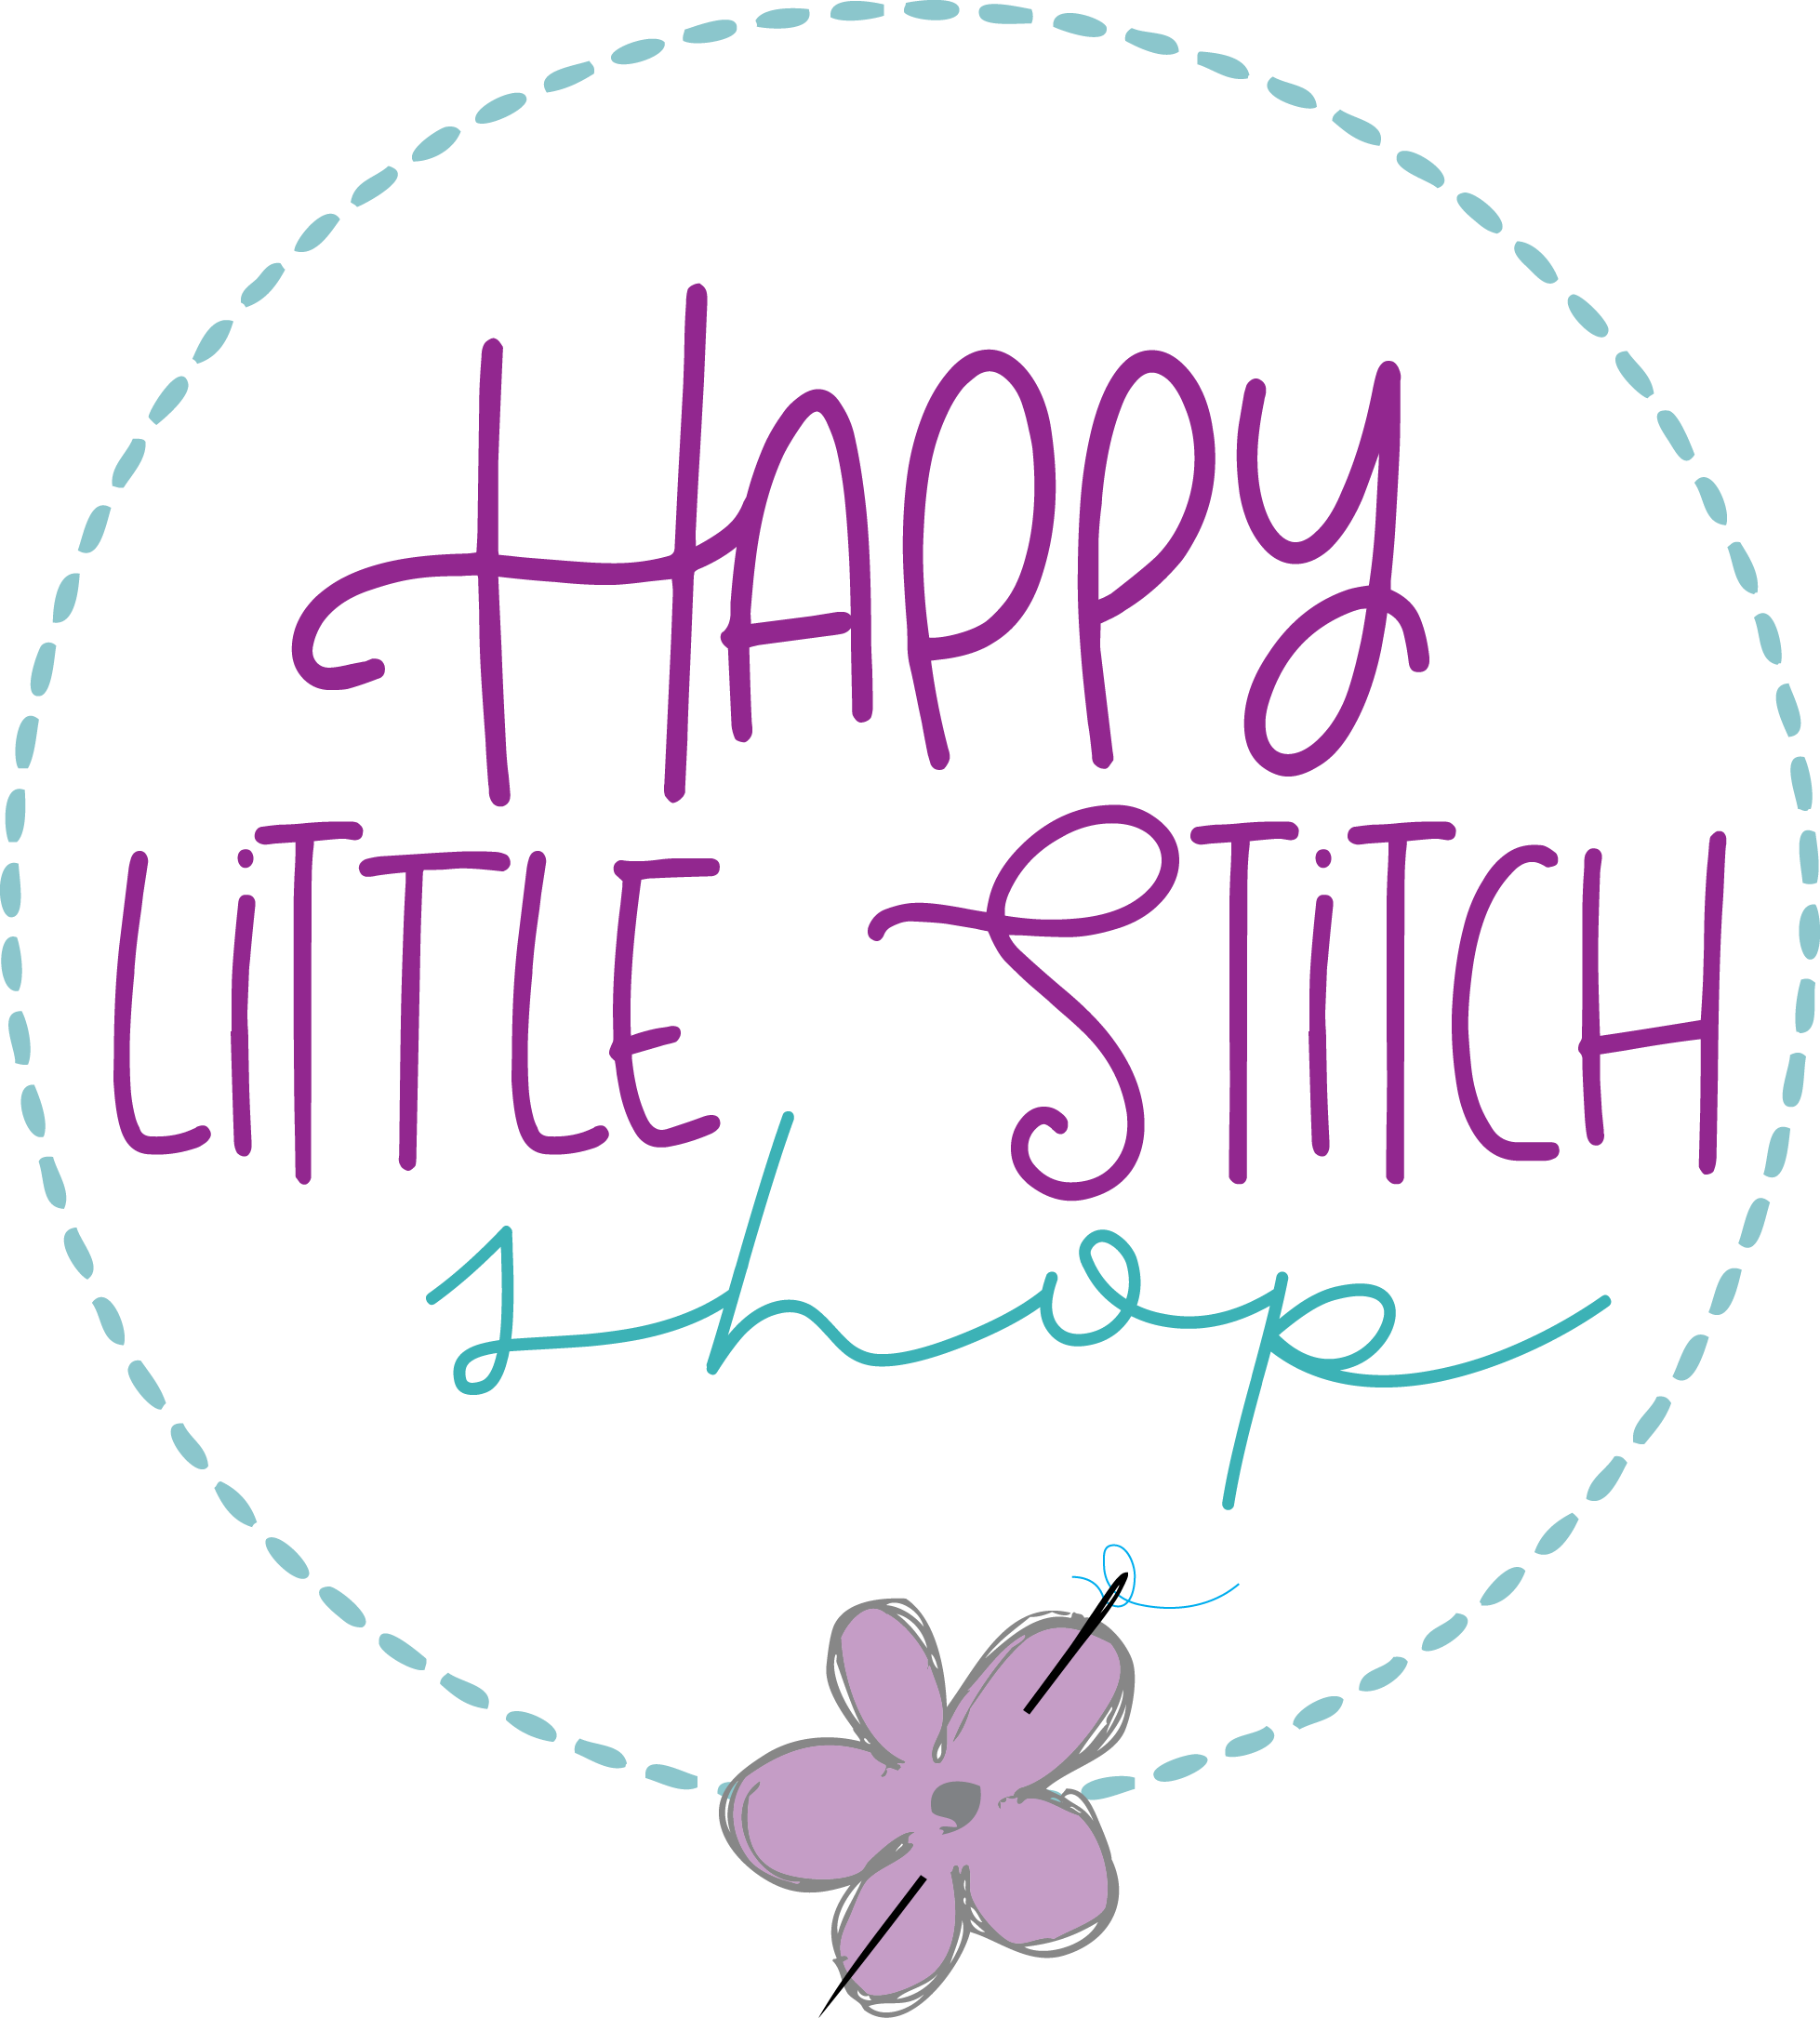 Stitchin' Littles – Personal Threads Boutique